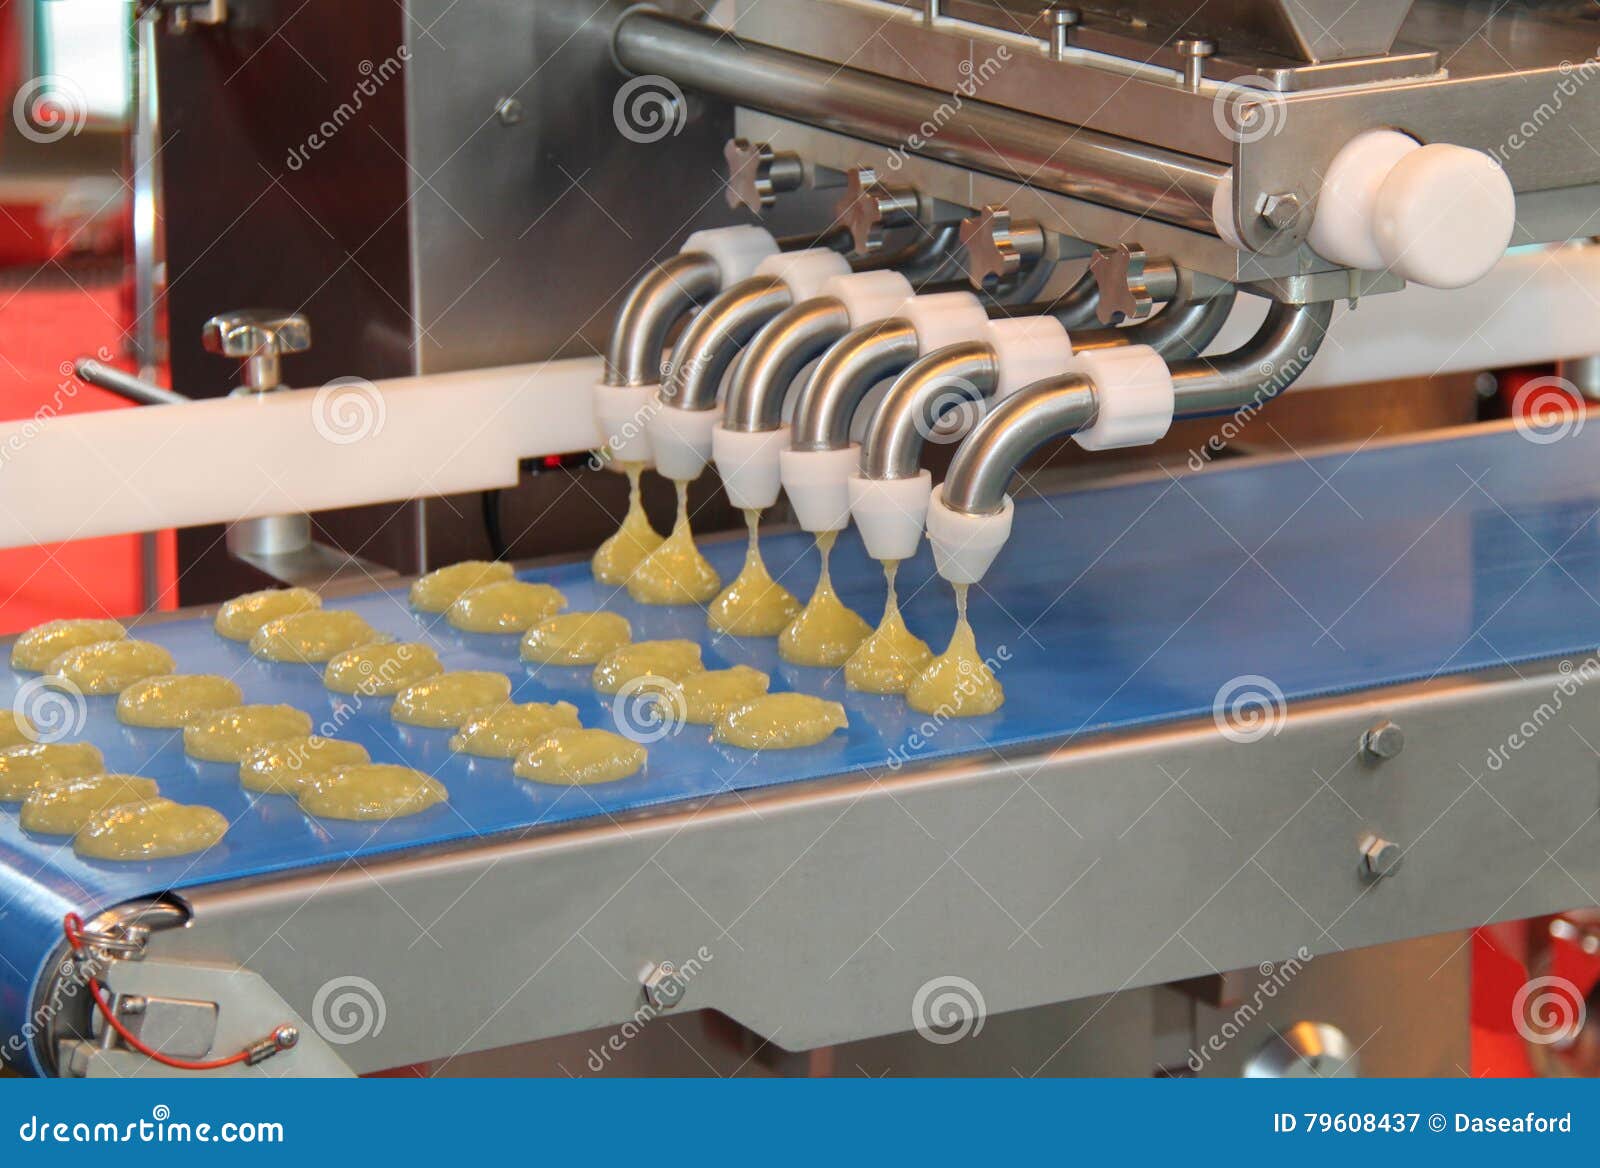 food processing machine.